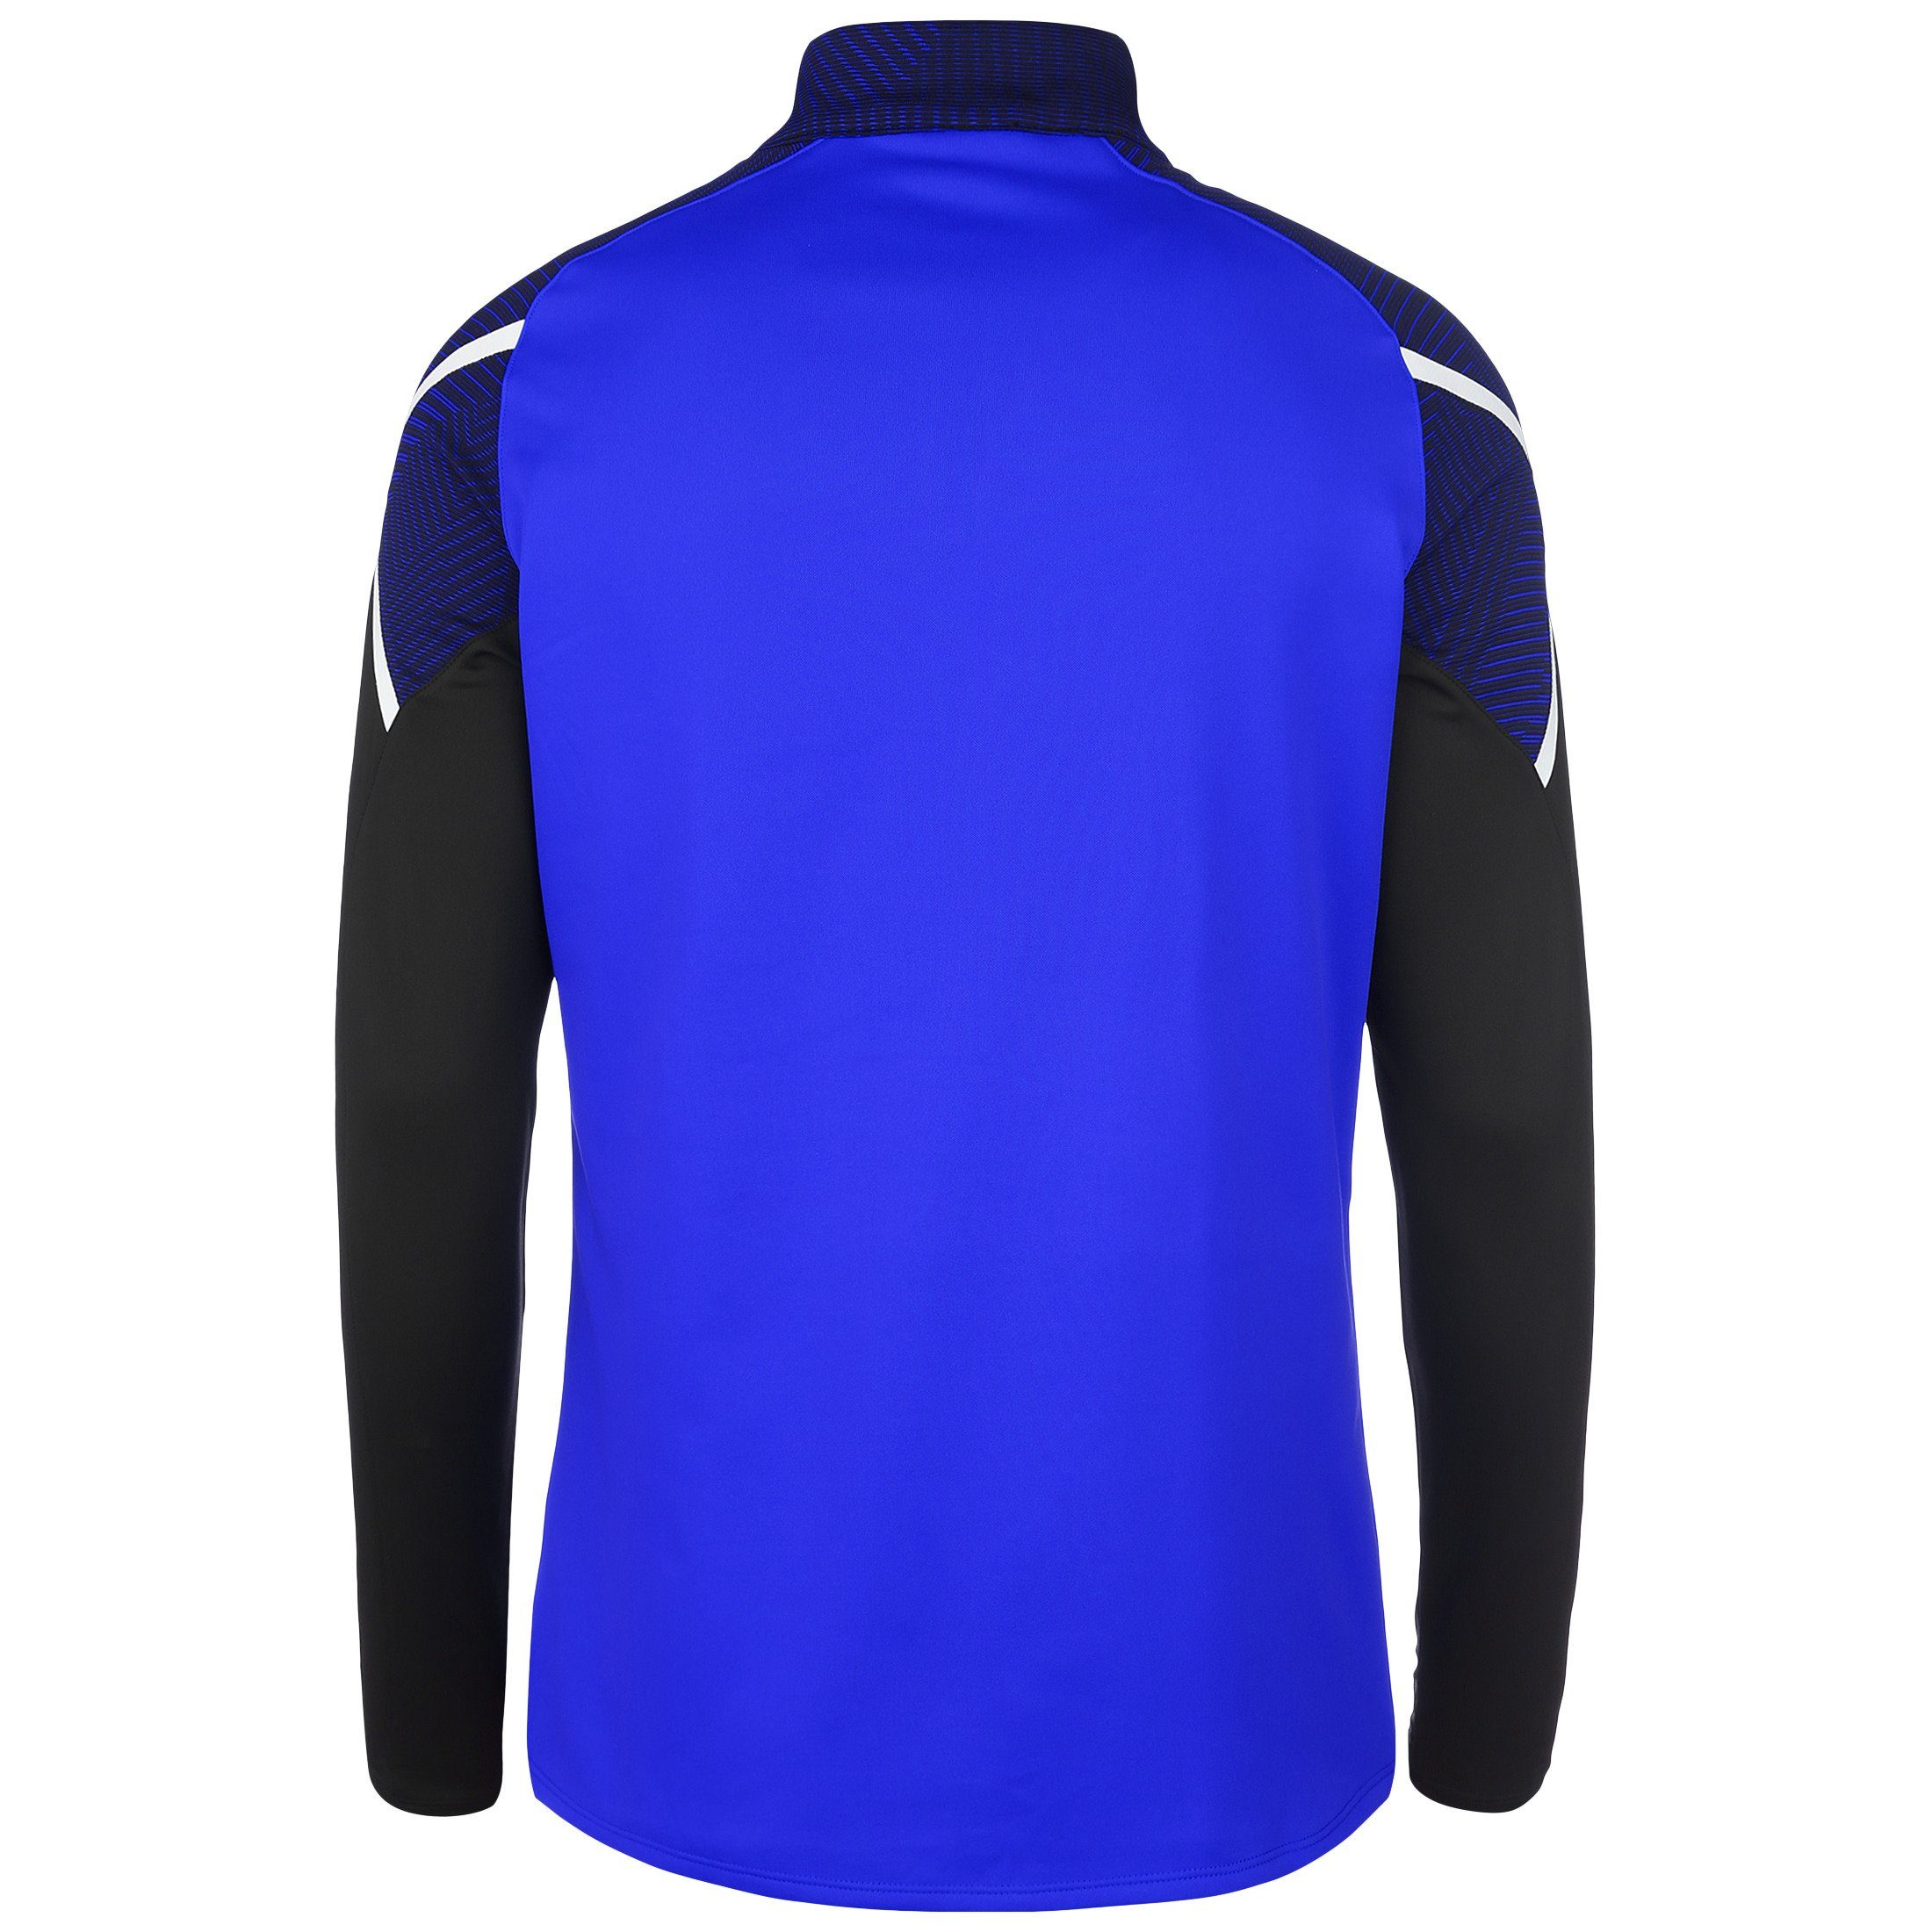 Trainingspullover / Herren Performance dunkelblau Ziptop Trainingsjacke blau Jako